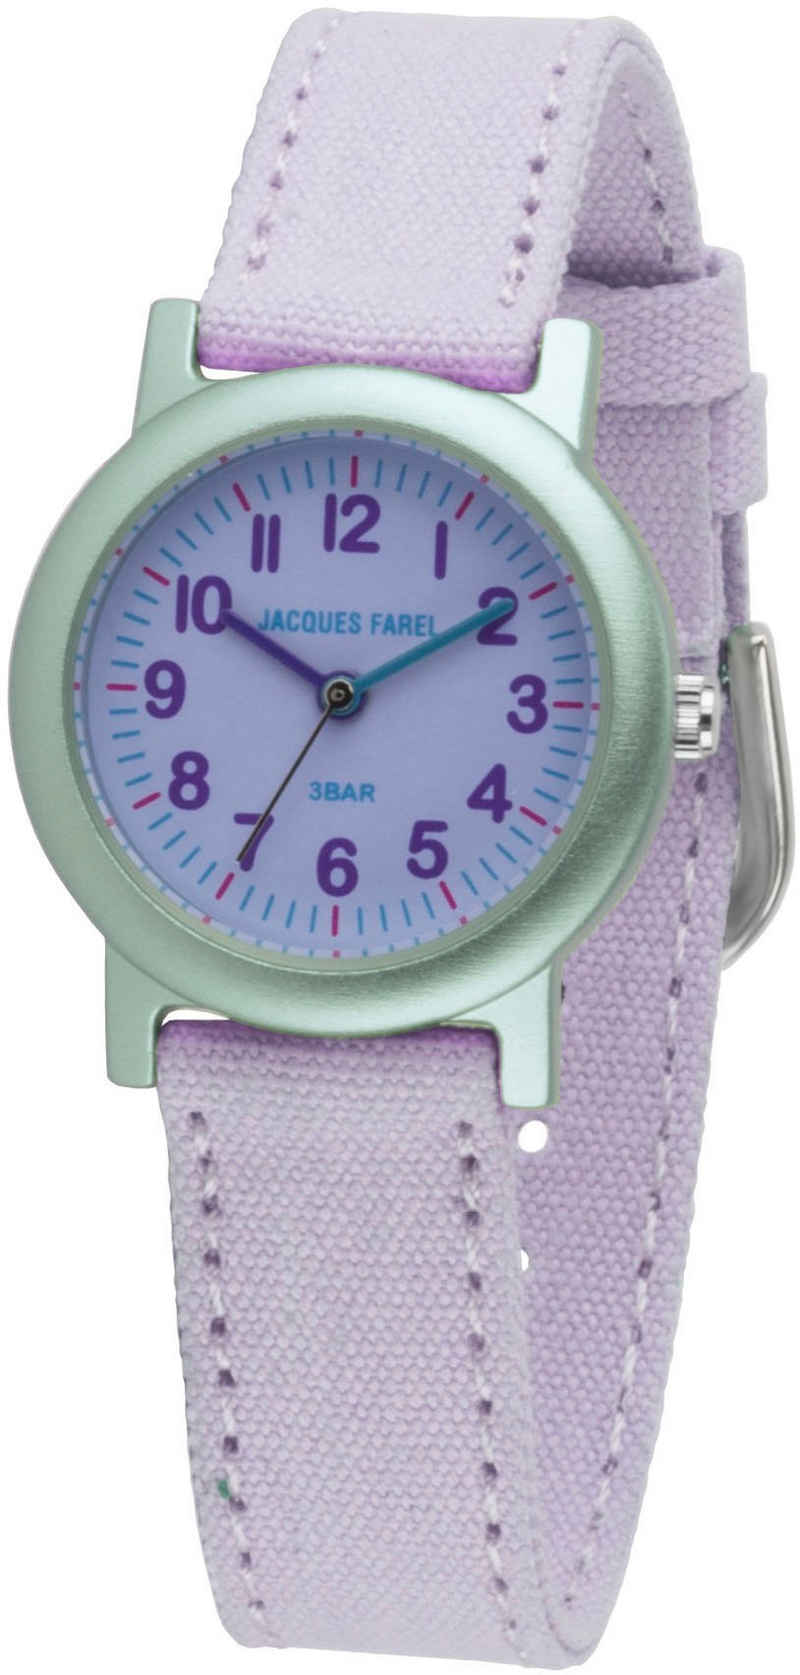 Jacques Farel Quarzuhr ORG 0310, Armbanduhr, Kinderuhr, Mädchenuhr, ideal auch als Geschenk